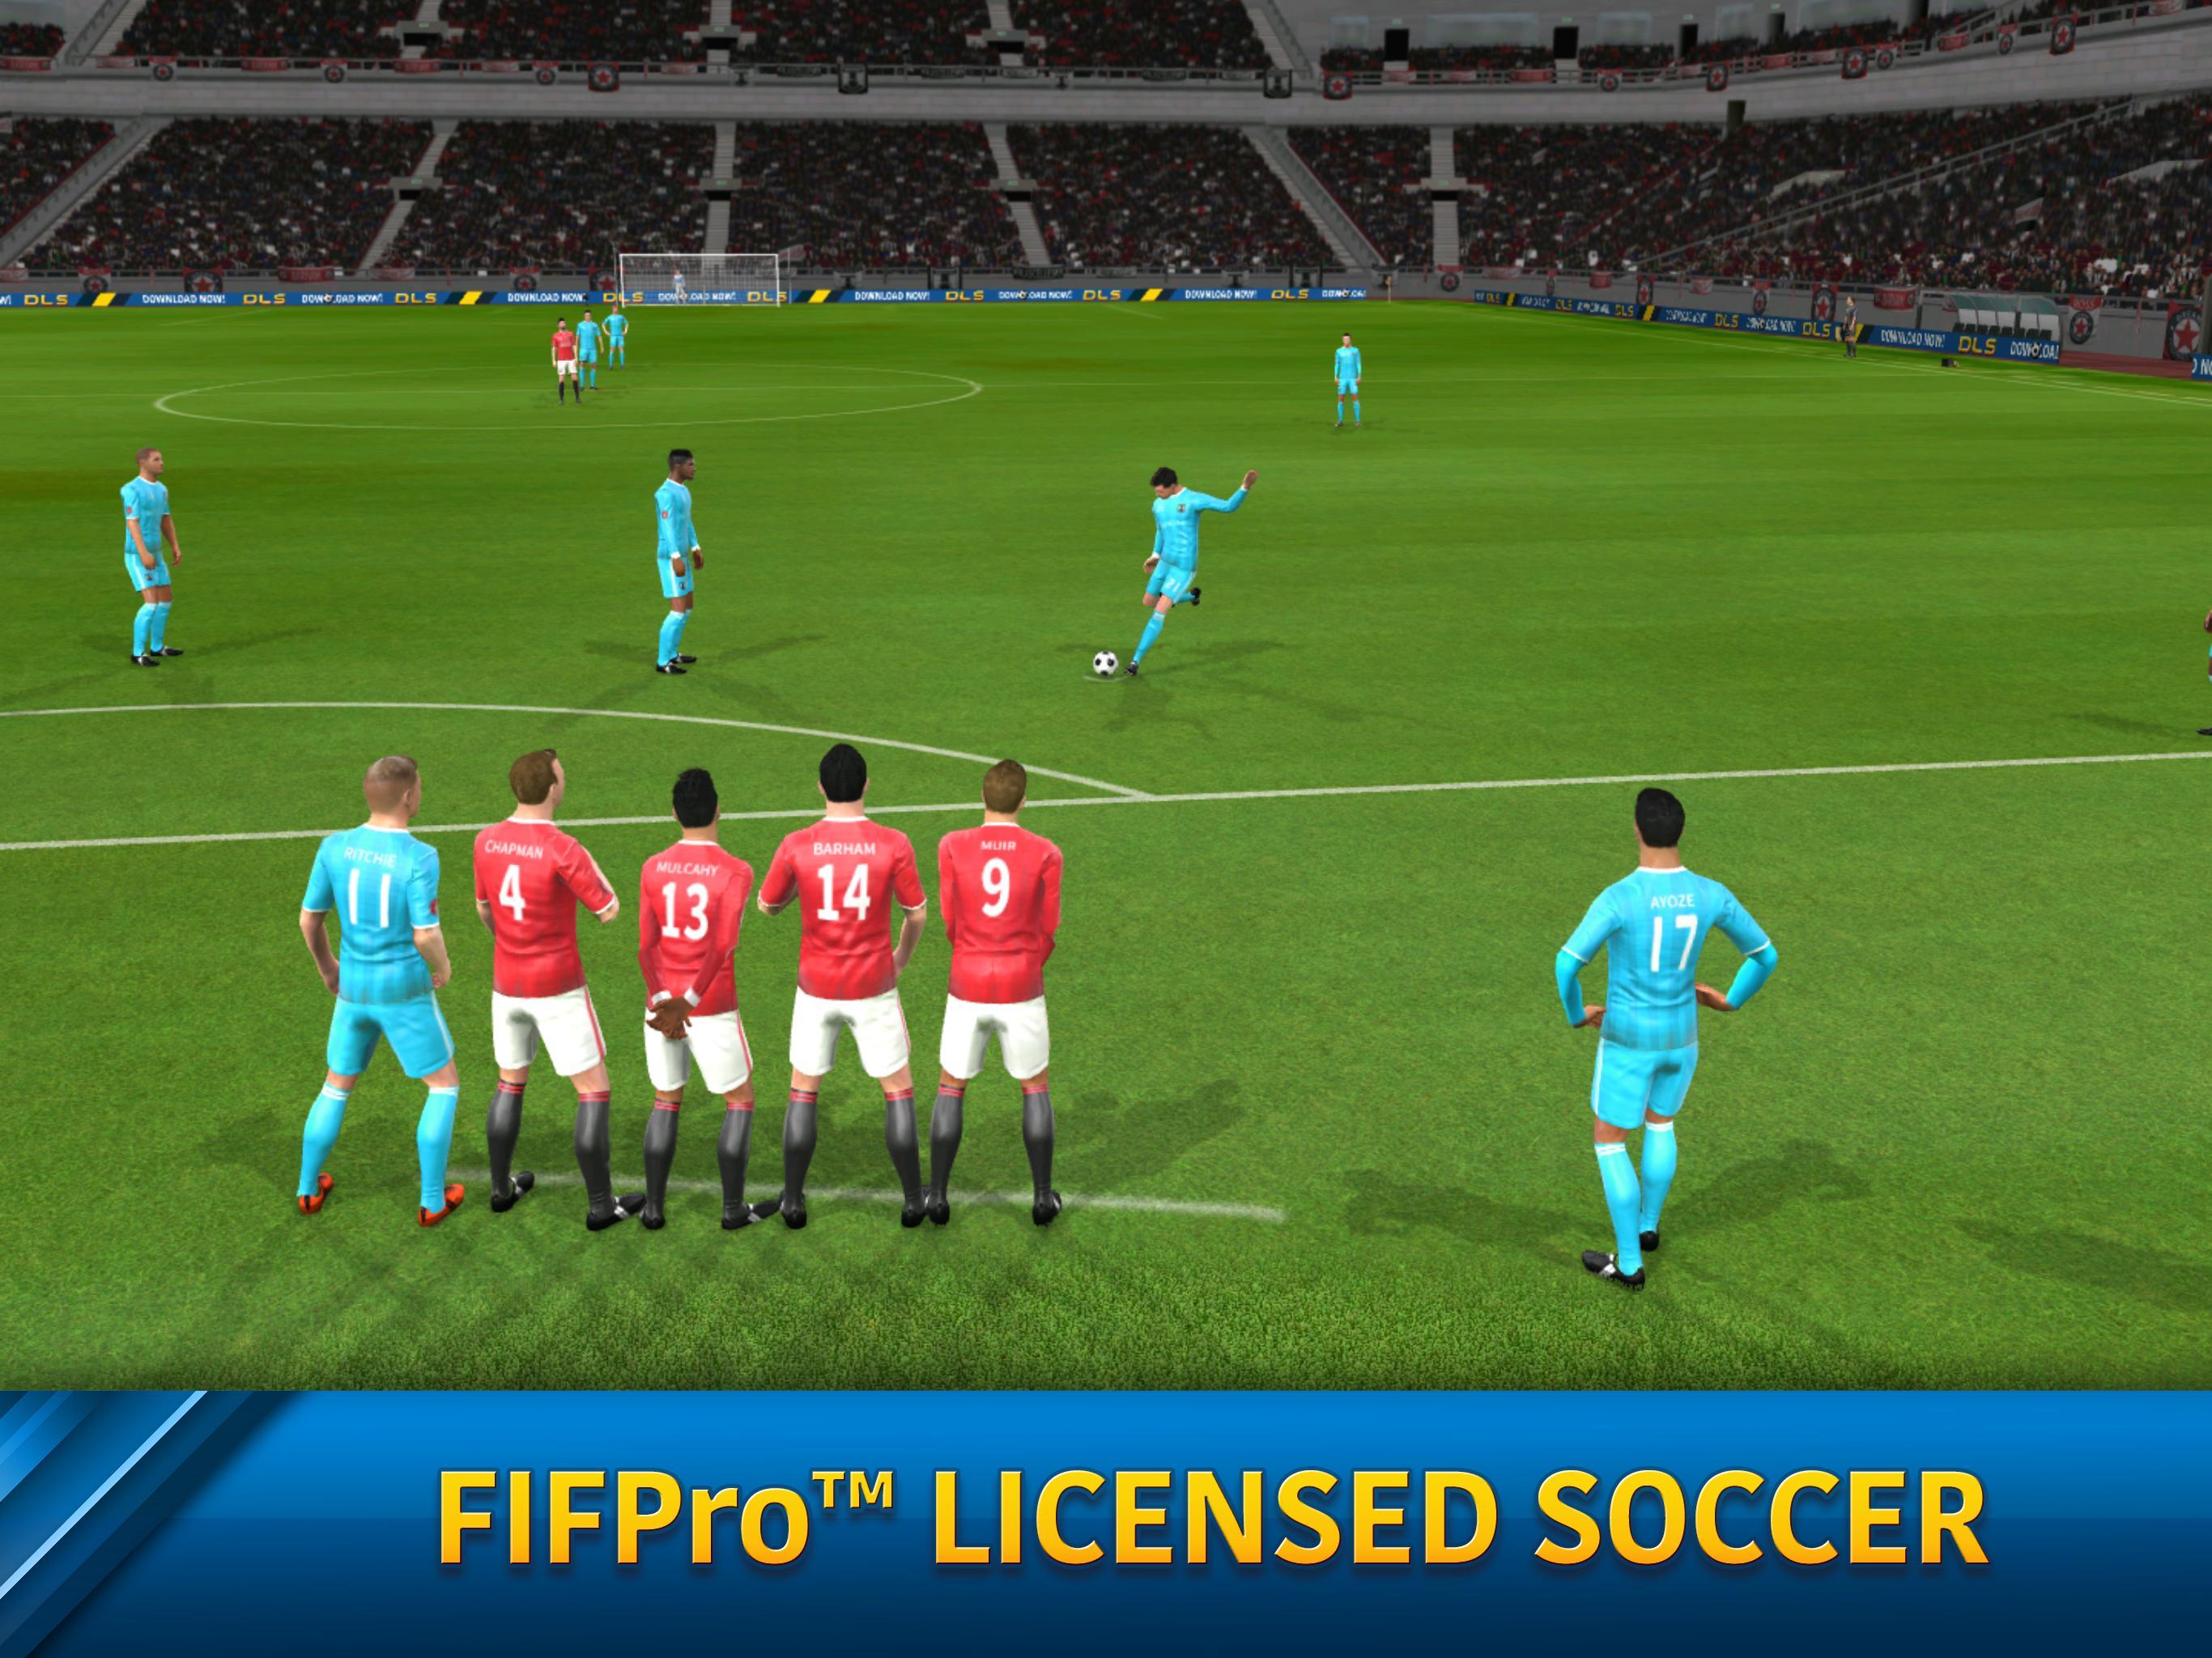 Dream League Soccer 2019 (Dls 19) Official App ( Apk+Obb) Android Download